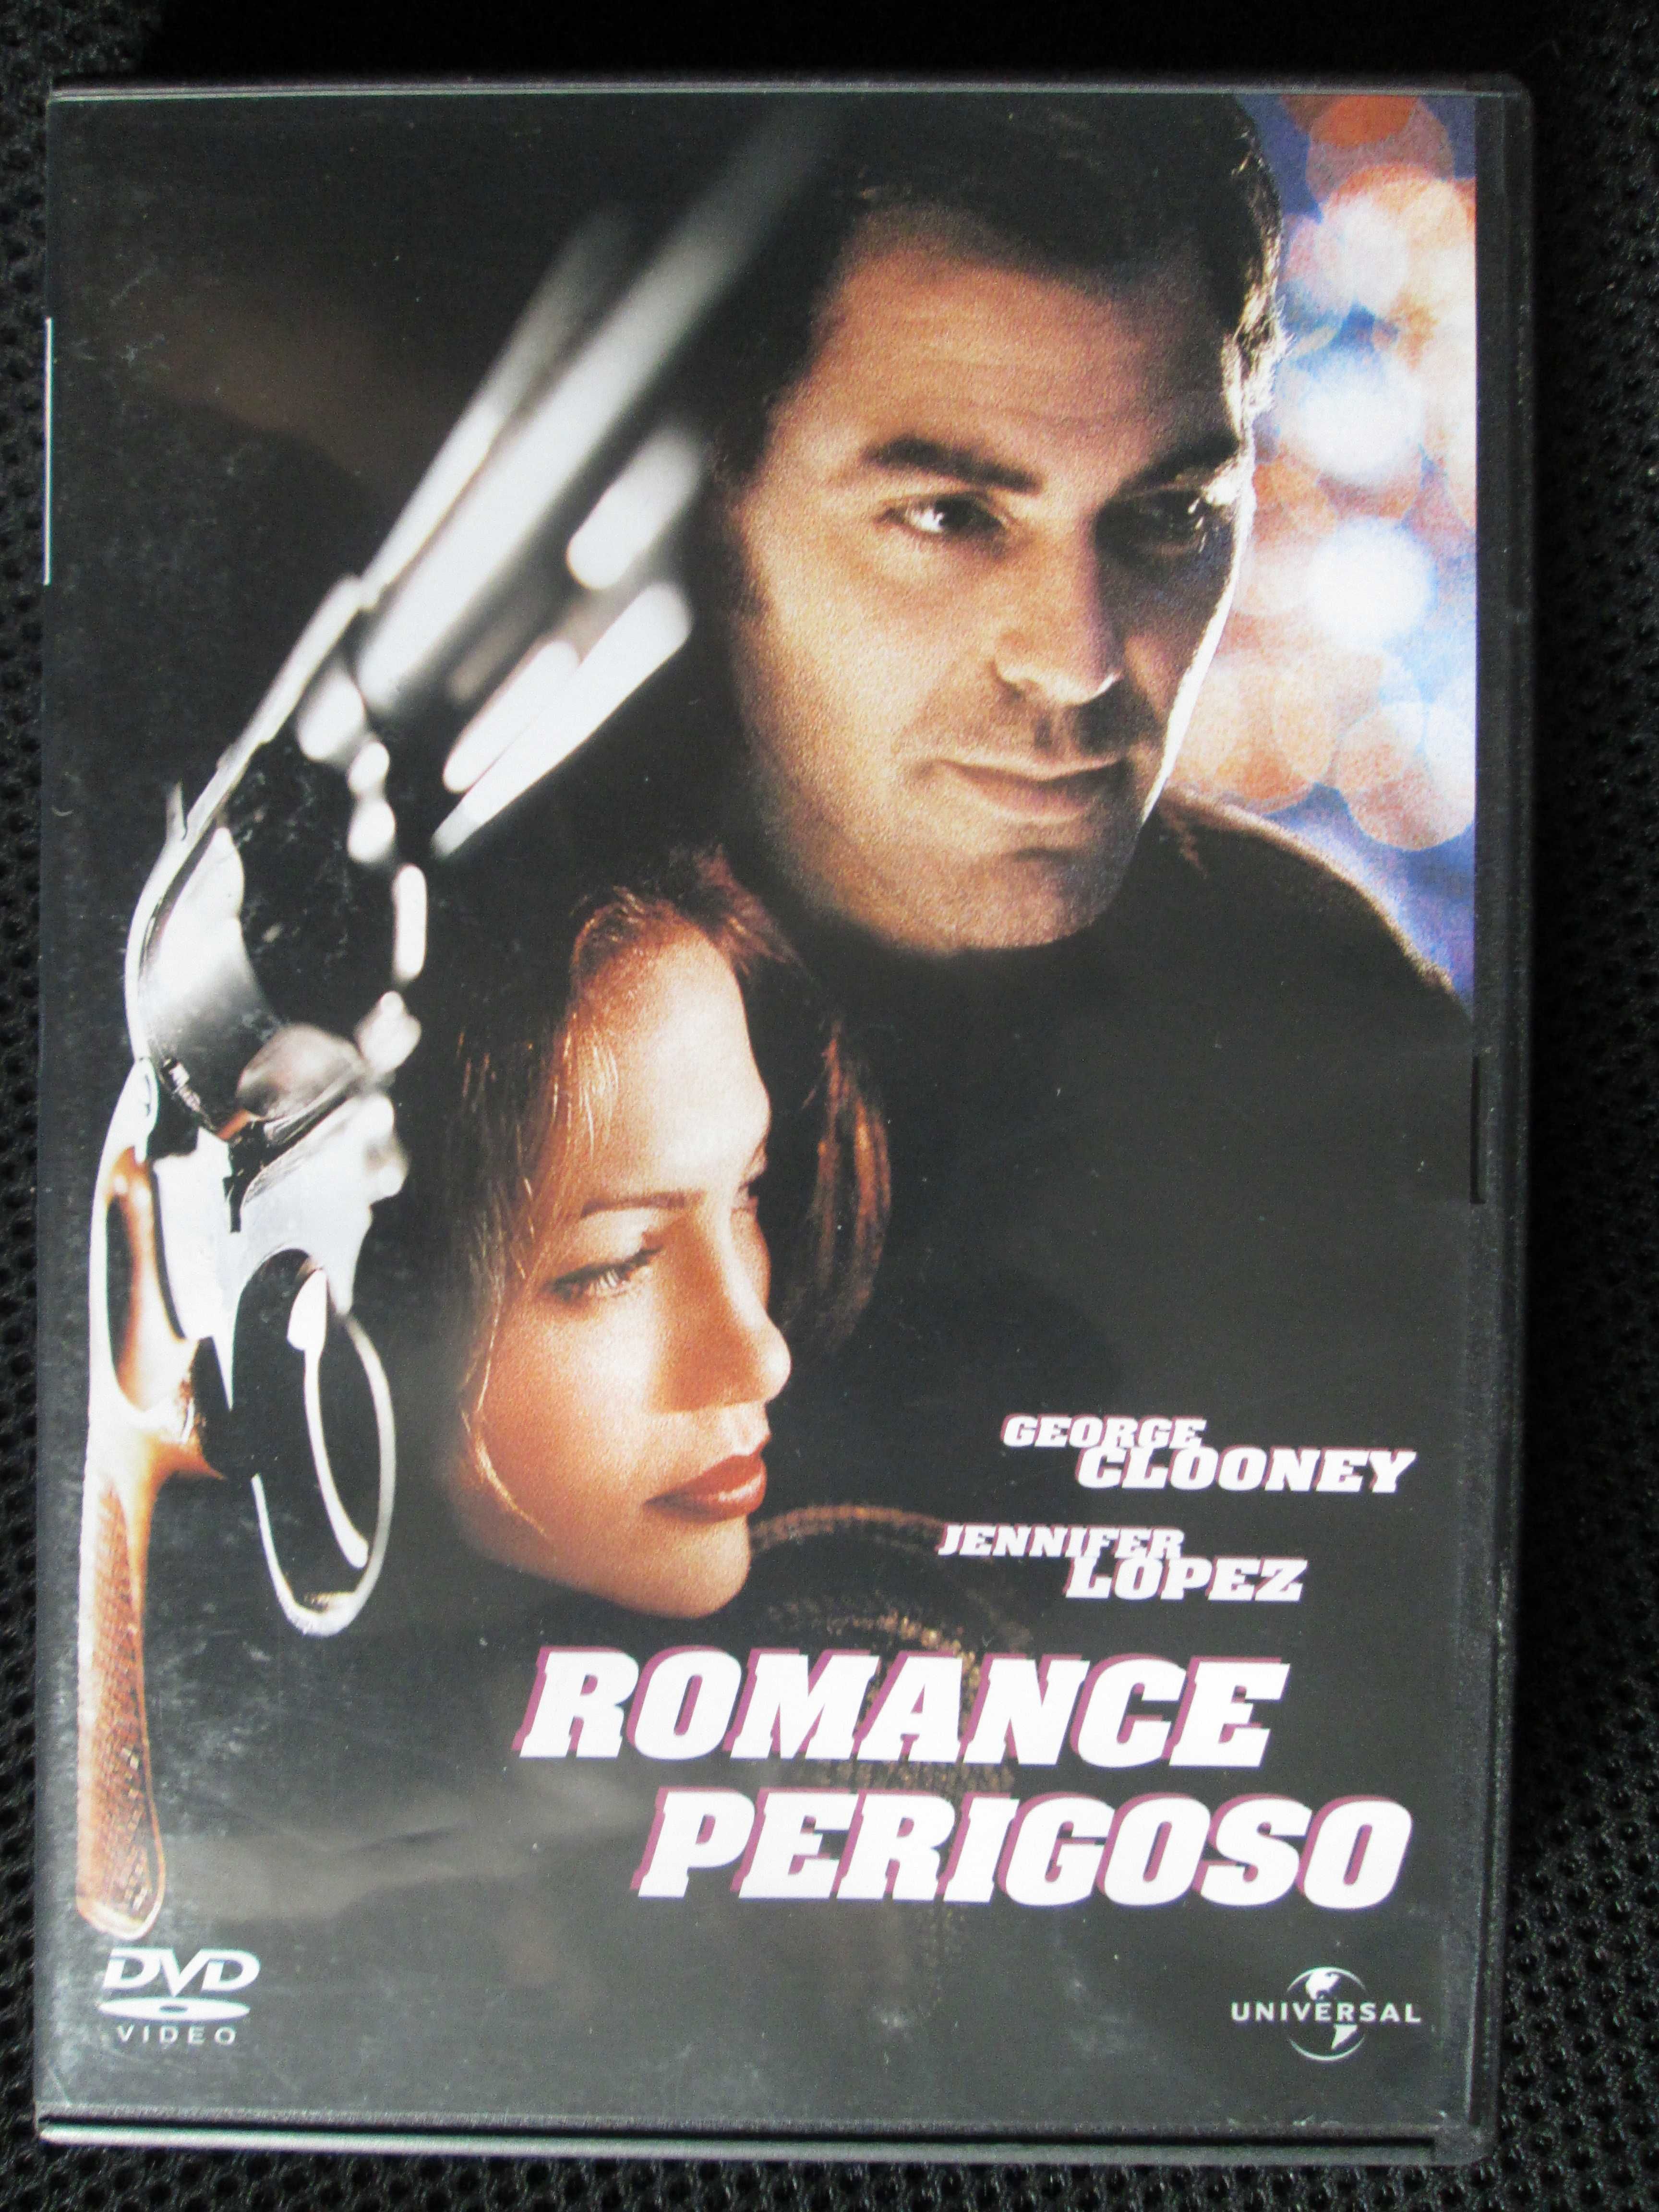 ROMANCE PERIGOSO, com George Clooney, Jennifer Lopez